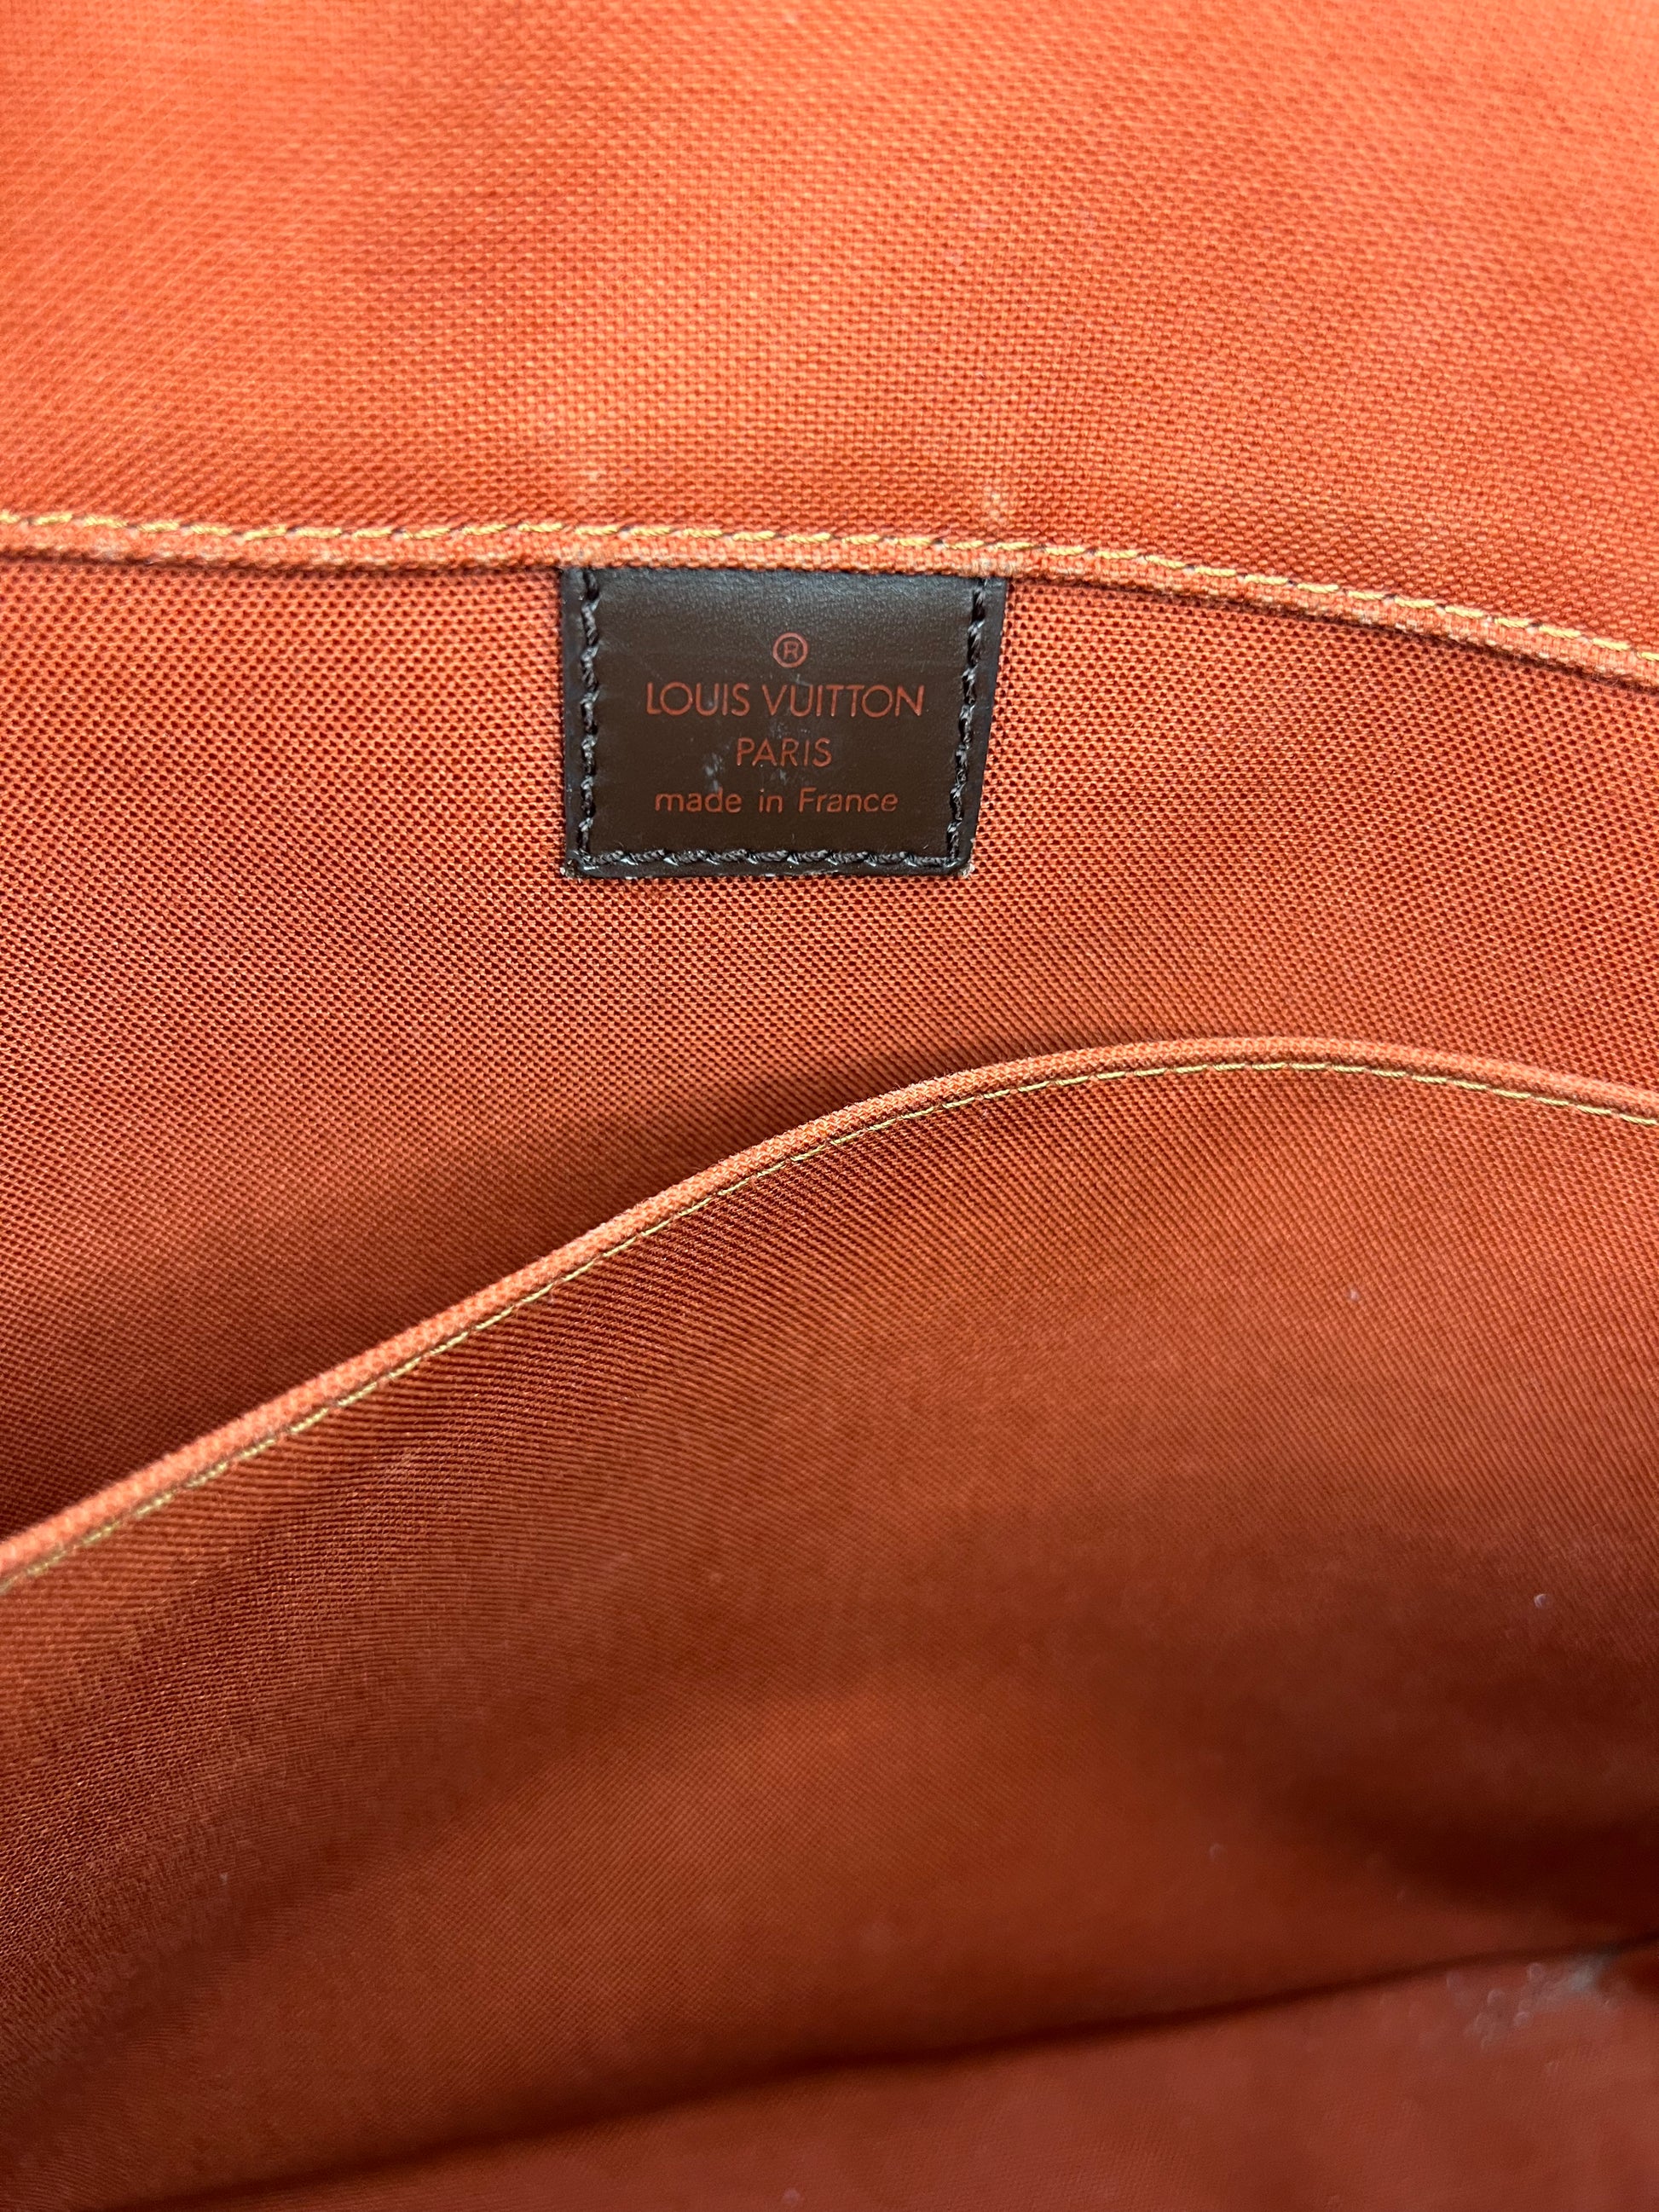 Louis Vuitton Bastille Messenger Bag in Damier Ebene - Free Shipping USA